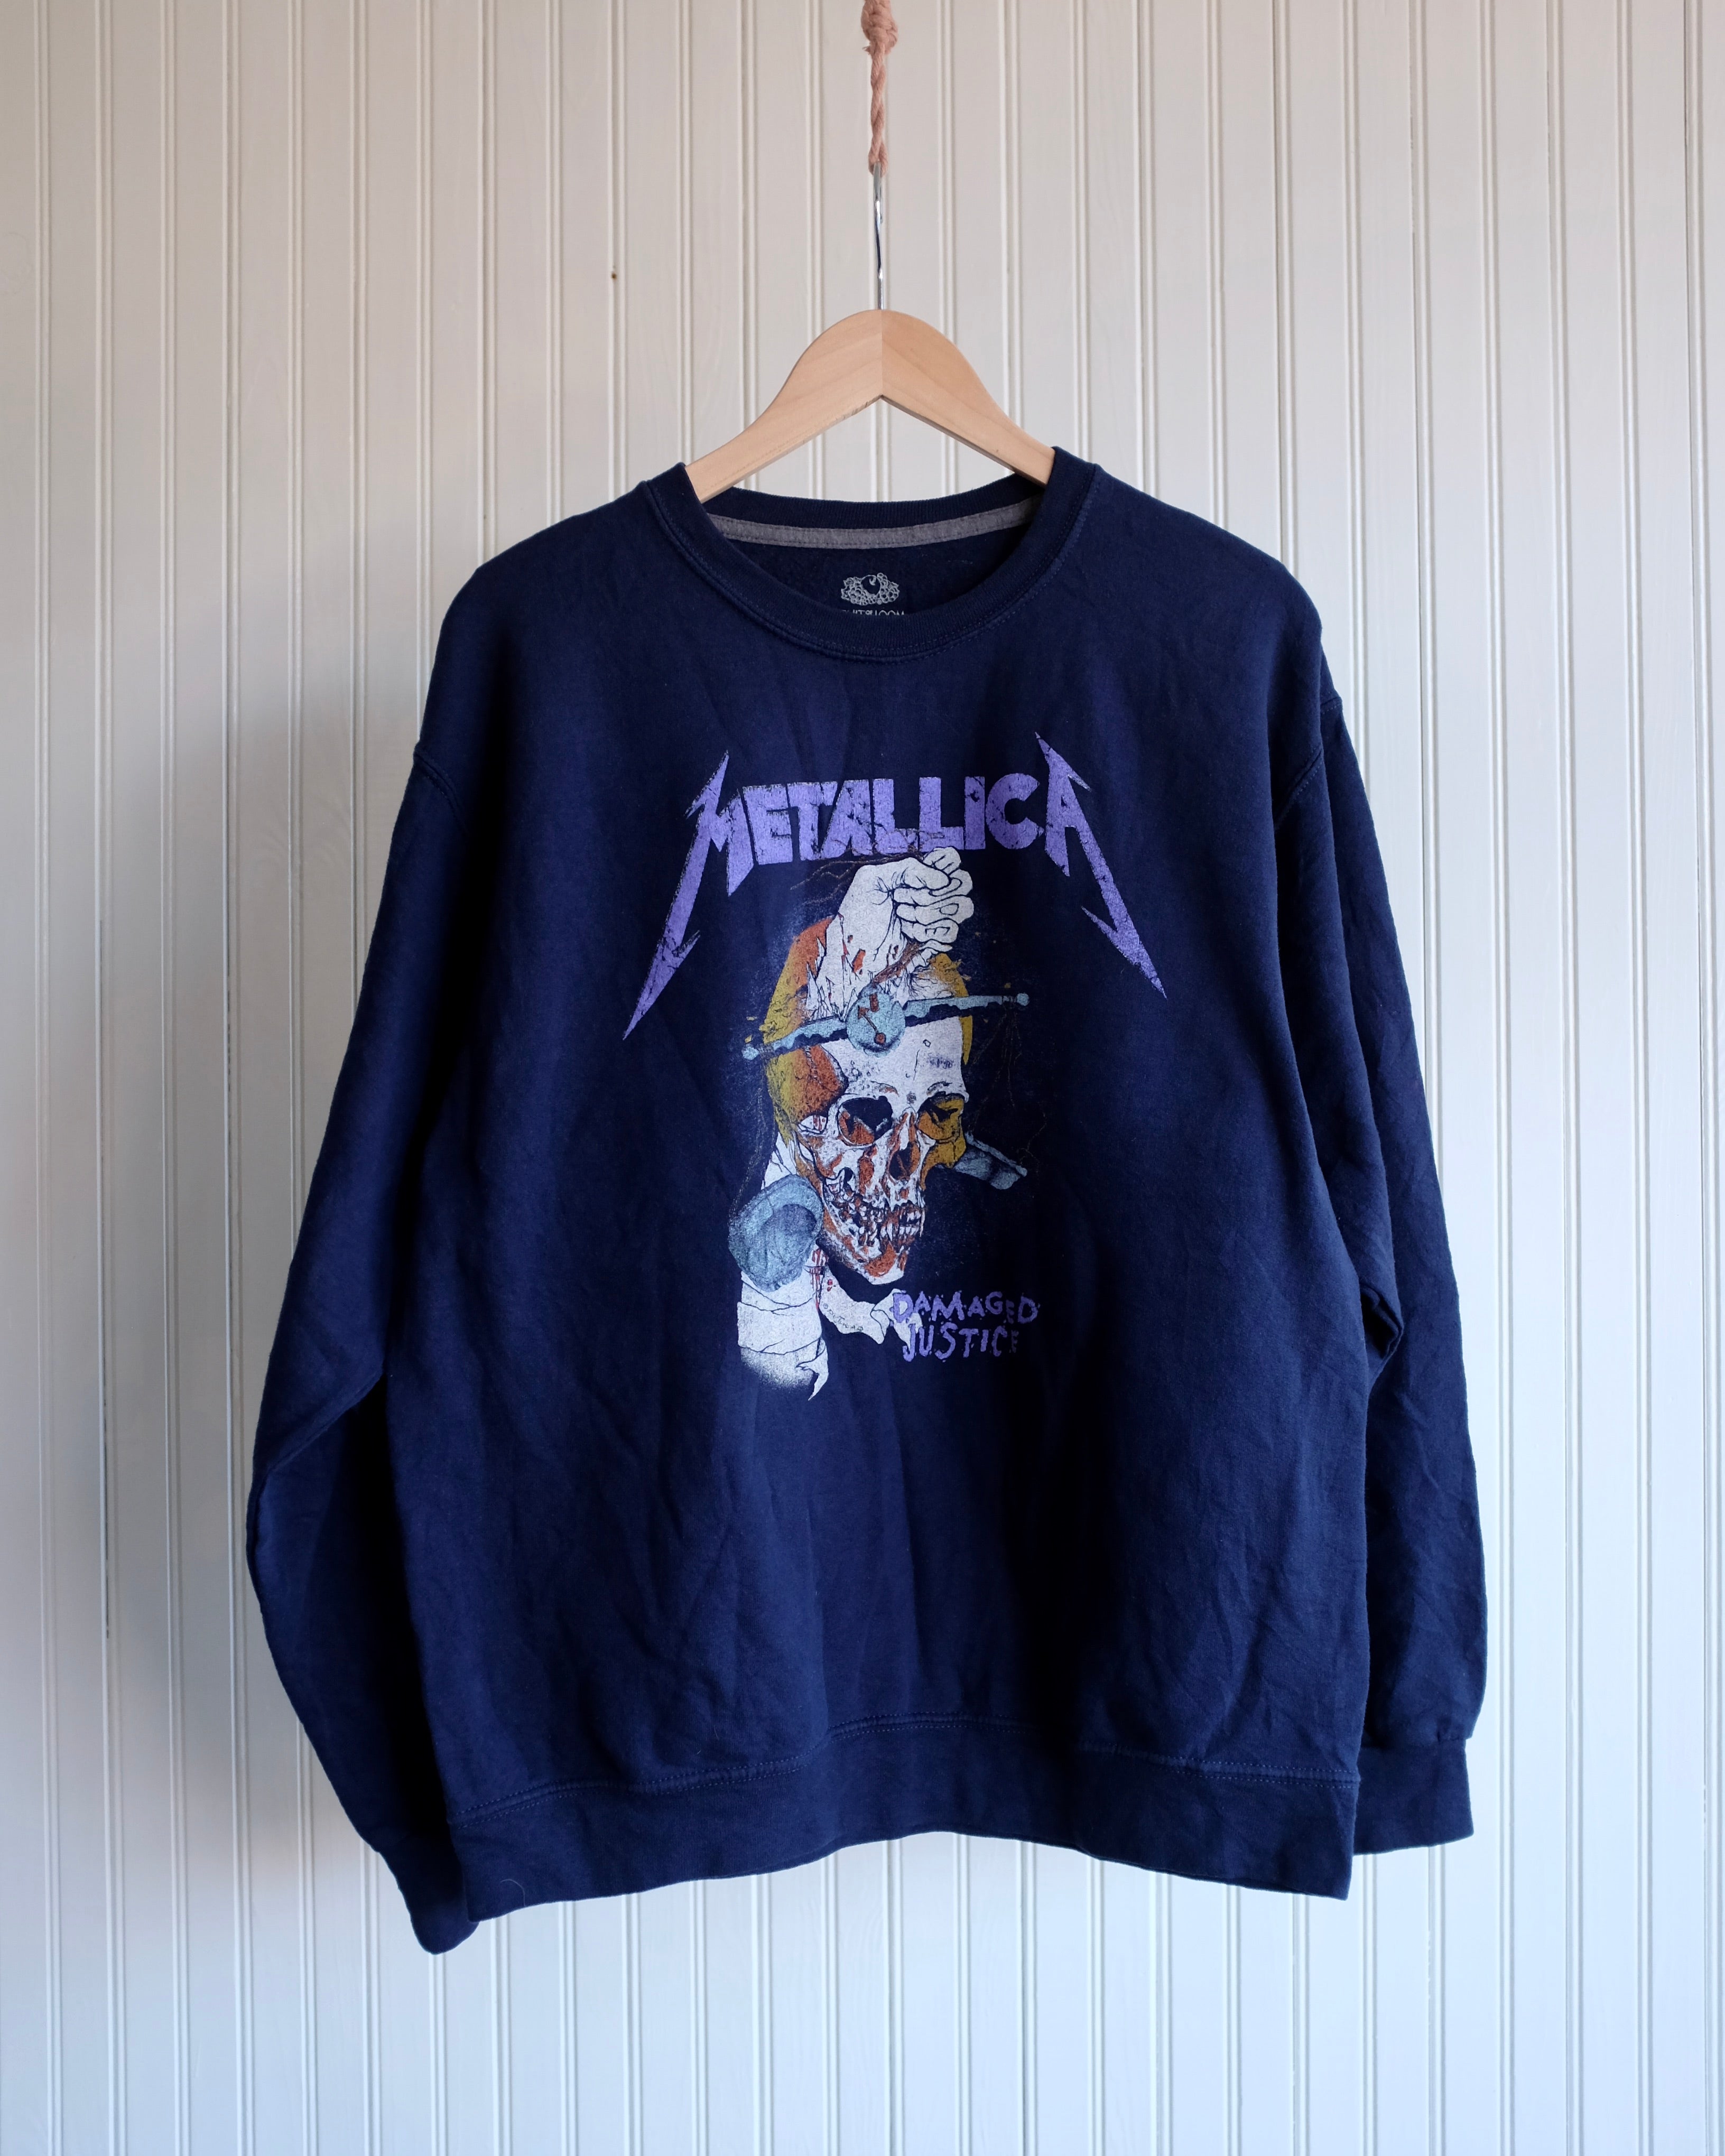 Metallica Sweatshirts - Blue